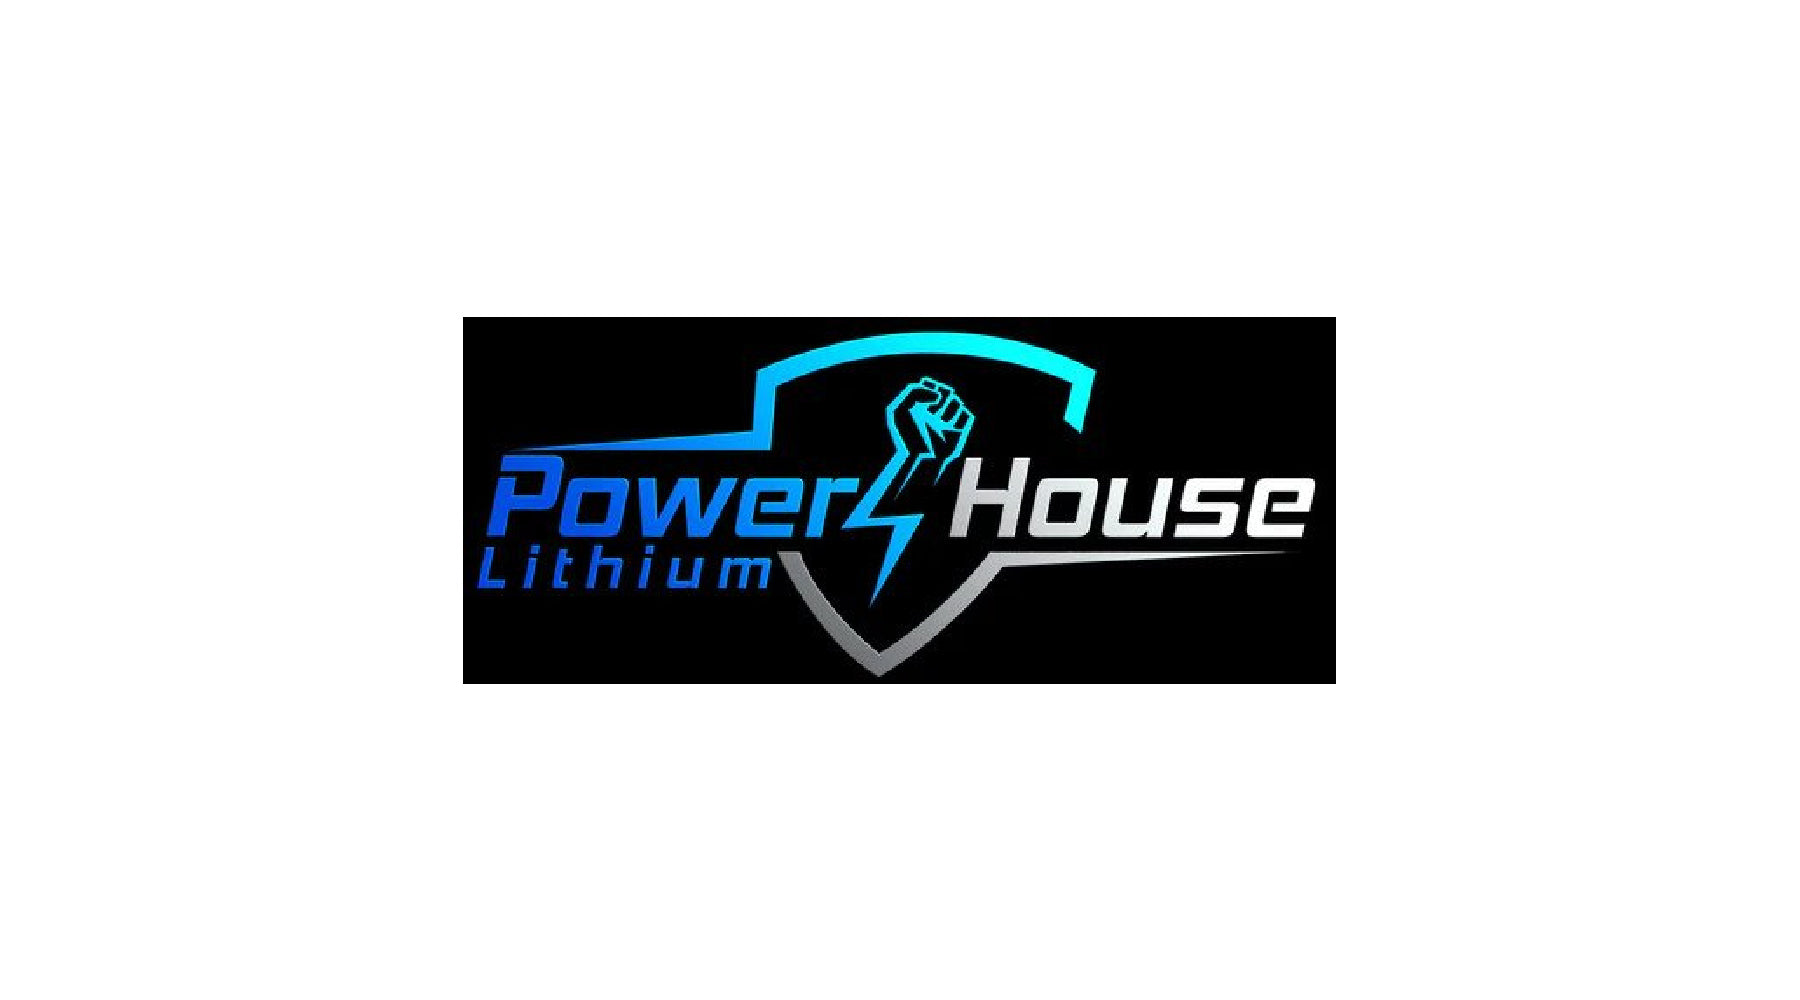 PowerHouse Lithium Warranty